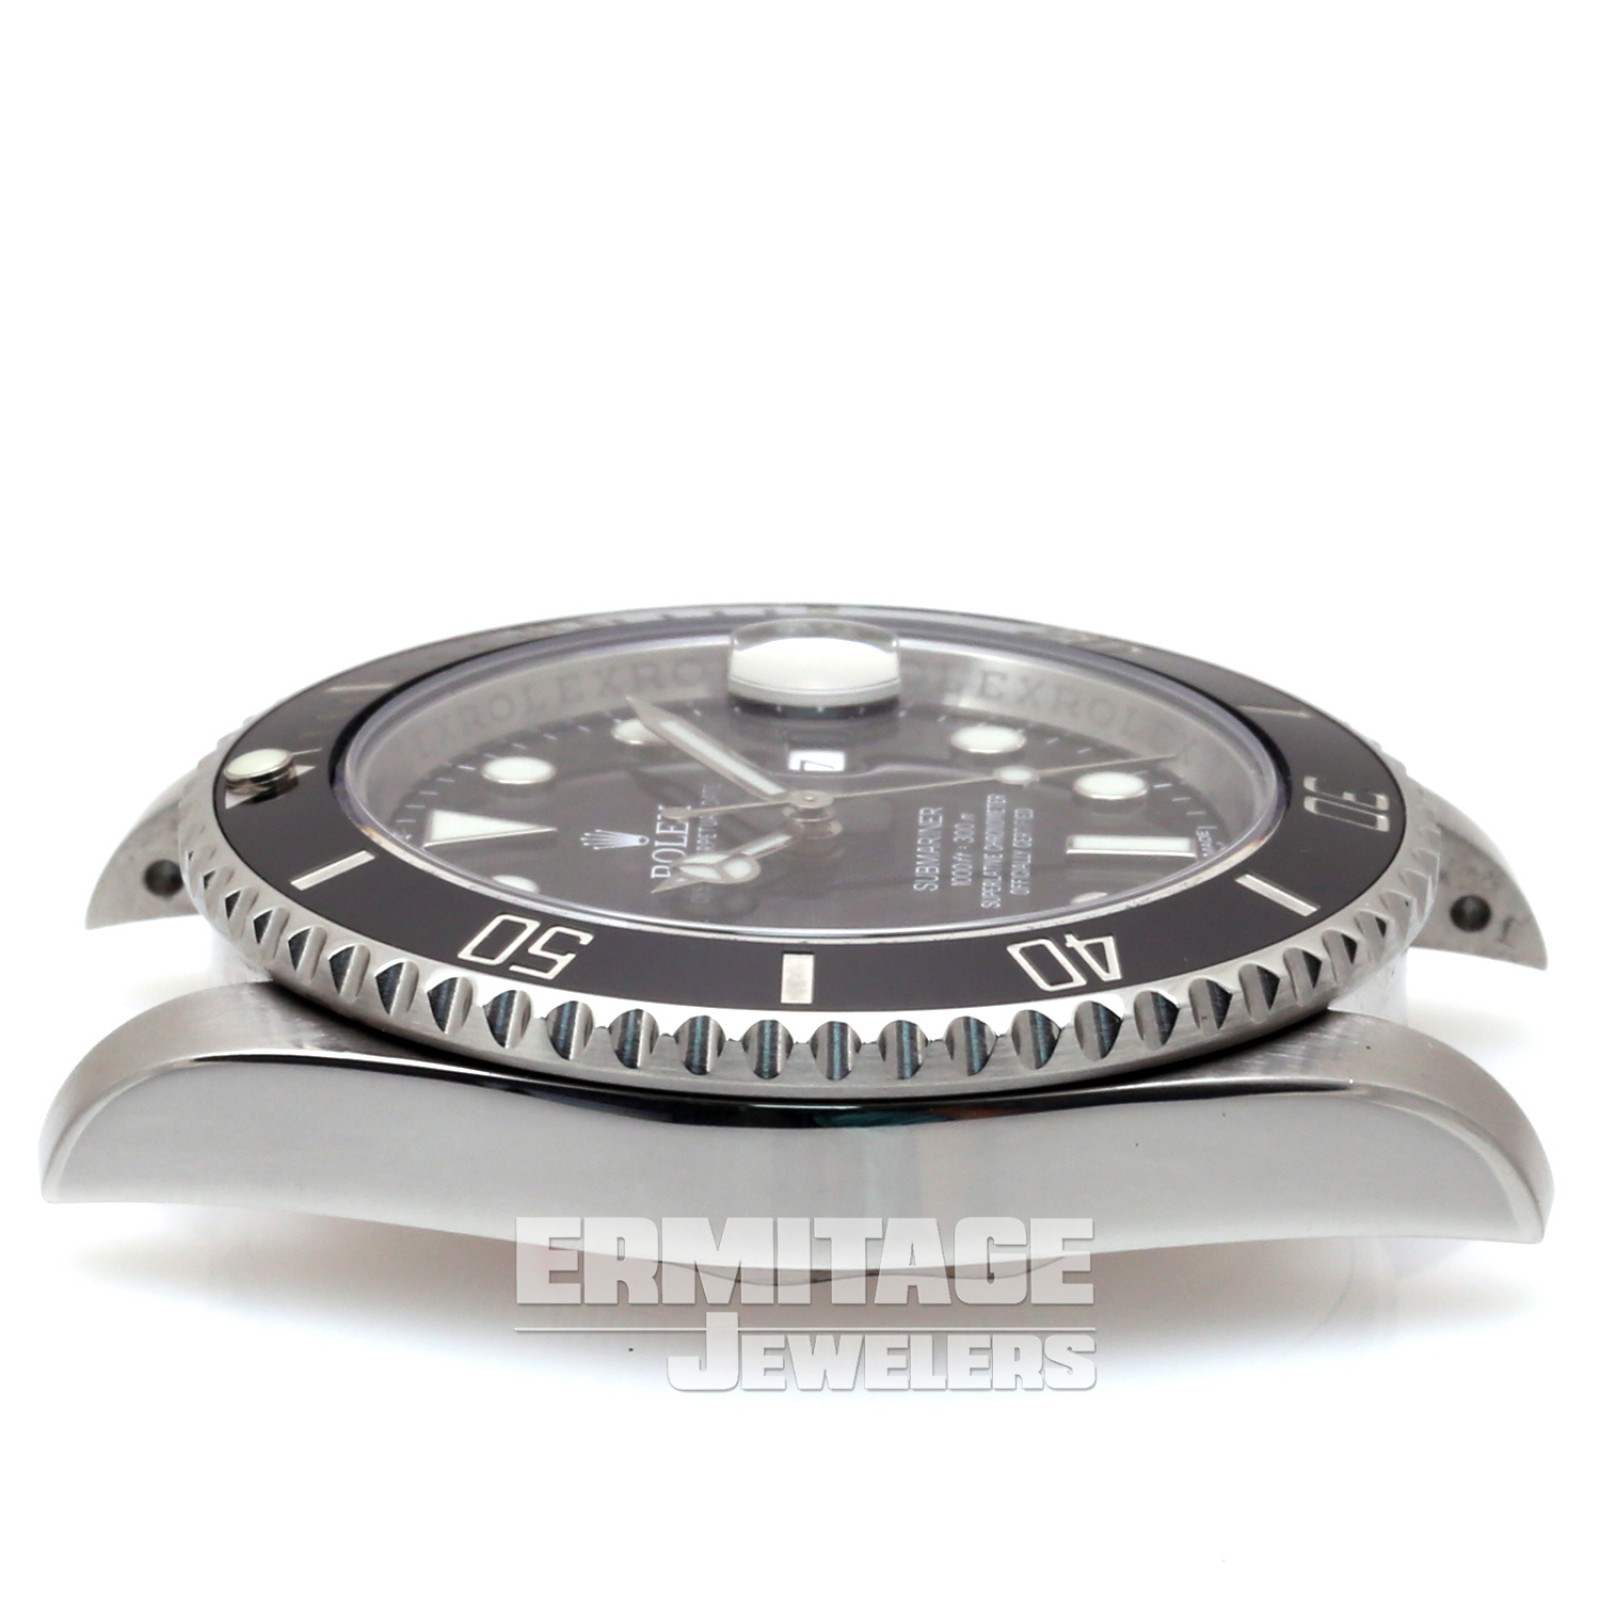 Rolex Submariner 116610 Mint Condition